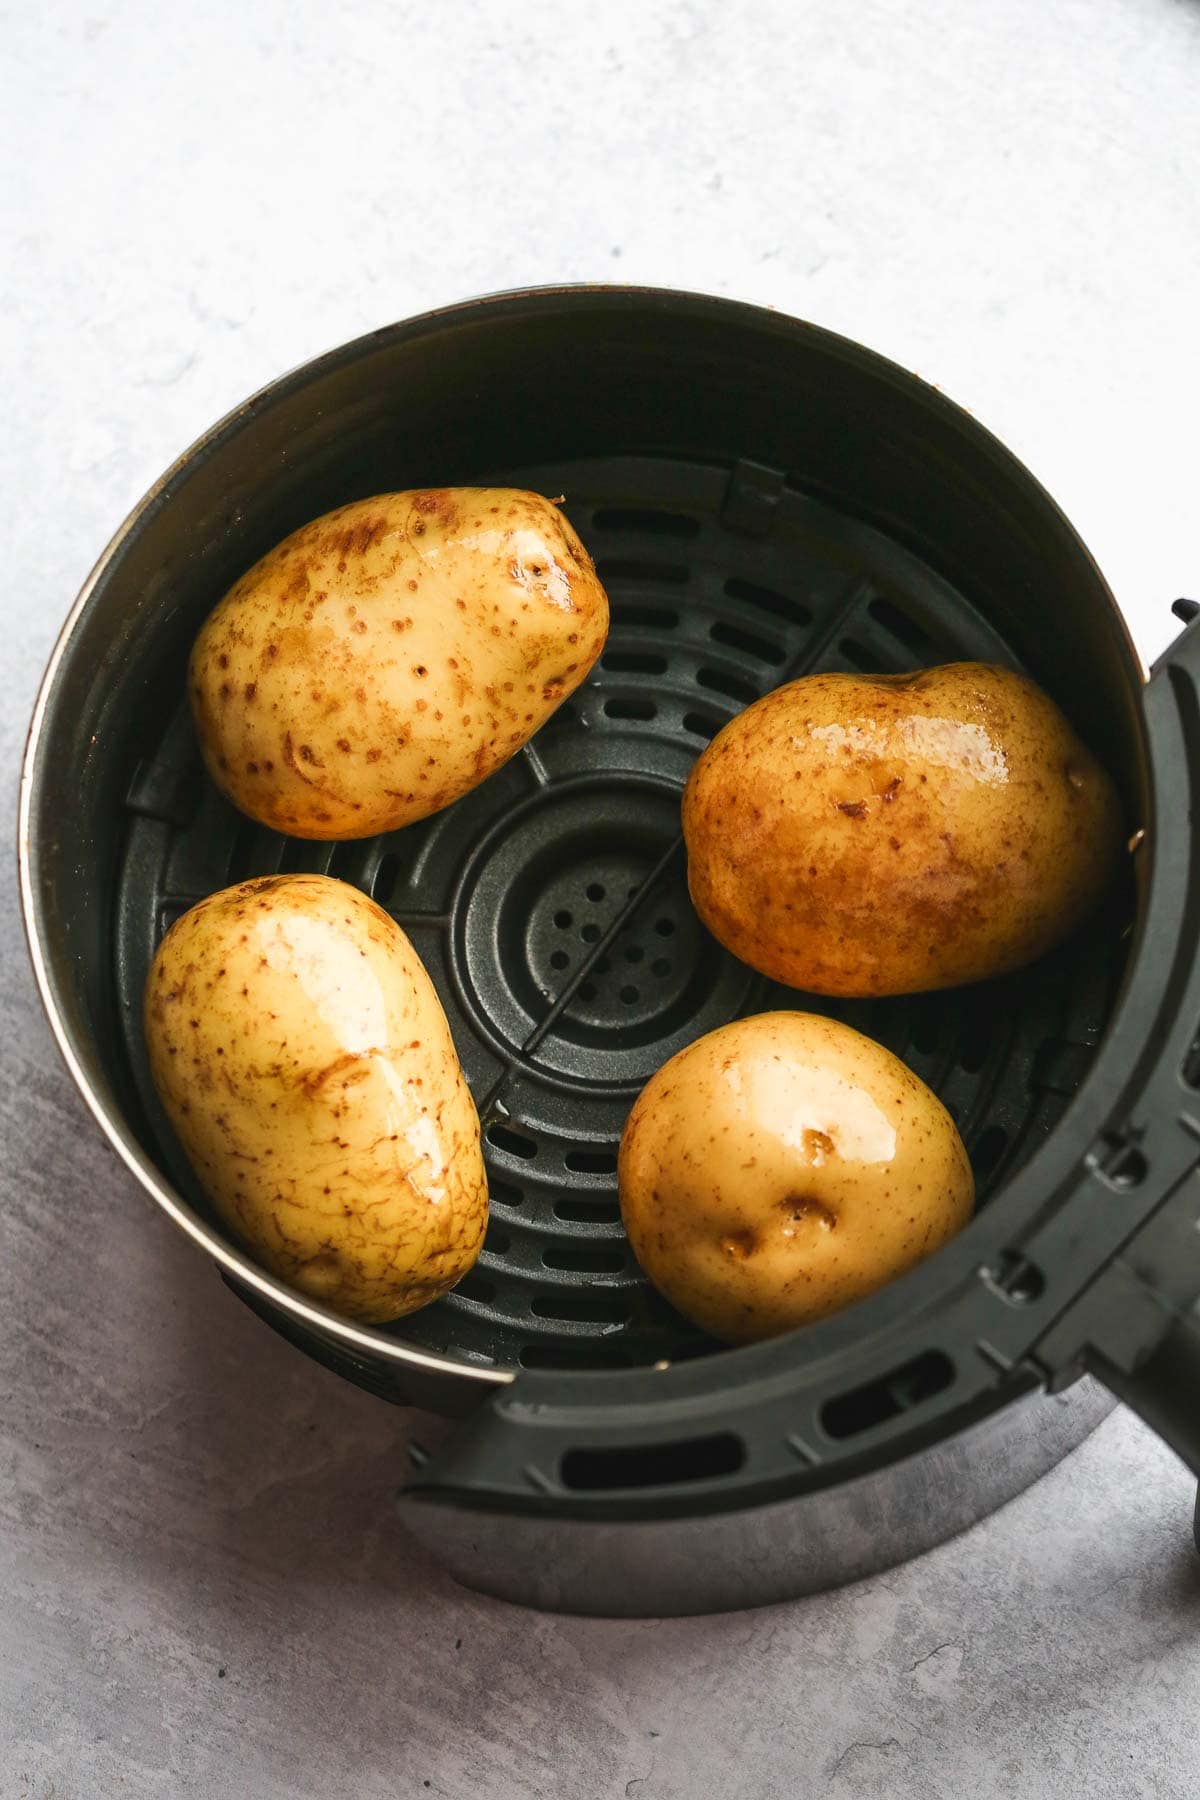 Four raw potatoes in an air fryer basket.